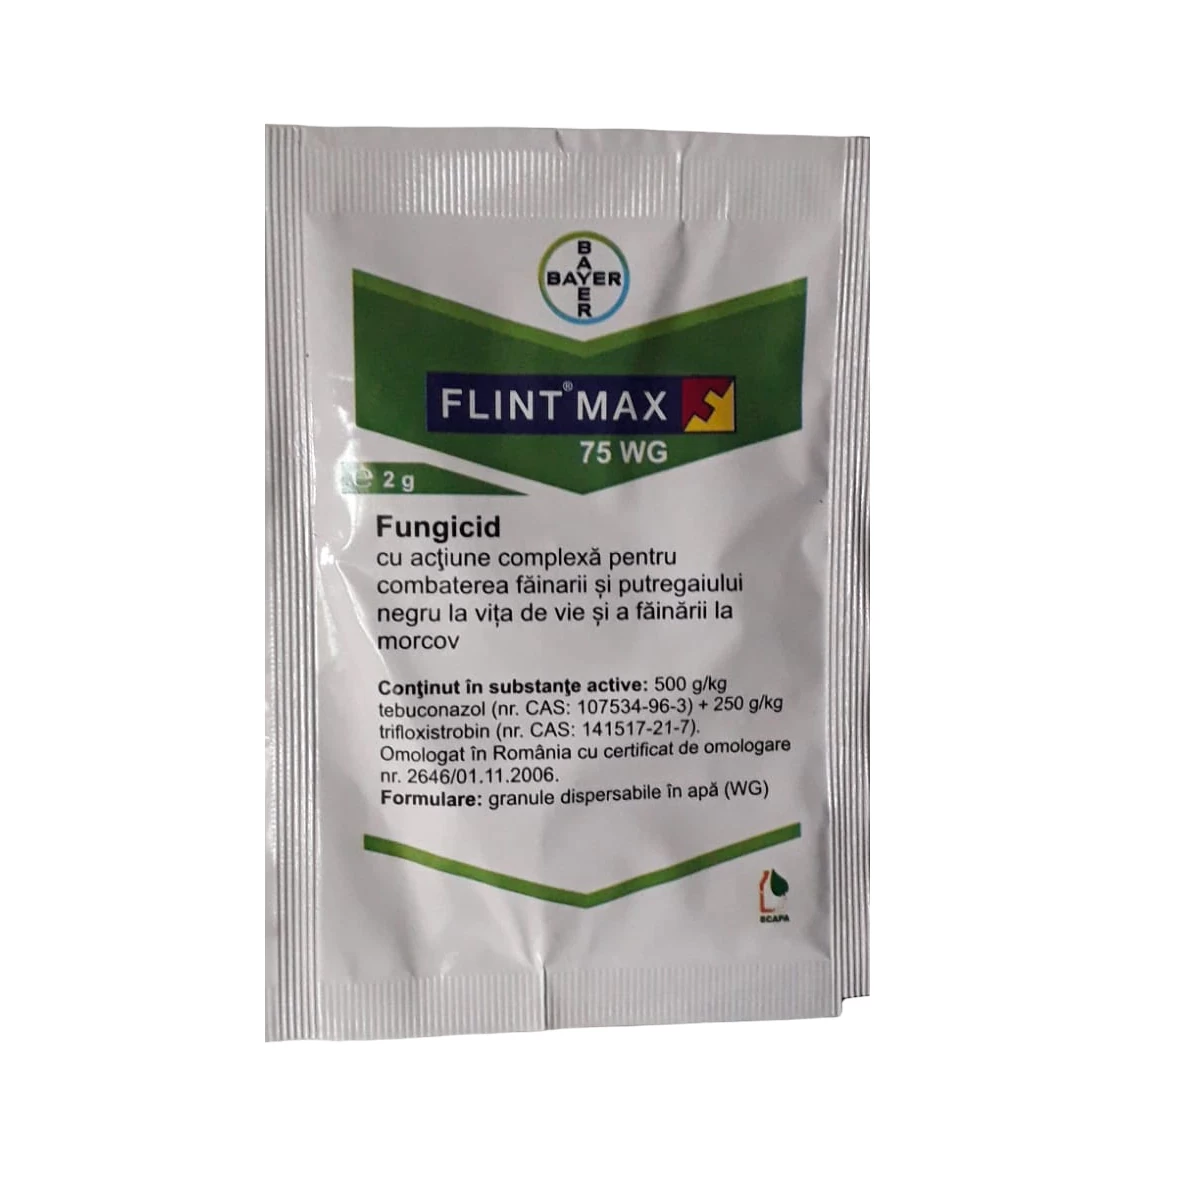 Fungicid FLINT MAX 75 WG - 2g, Bayer, Vita de vie, Morcov, Sistemic